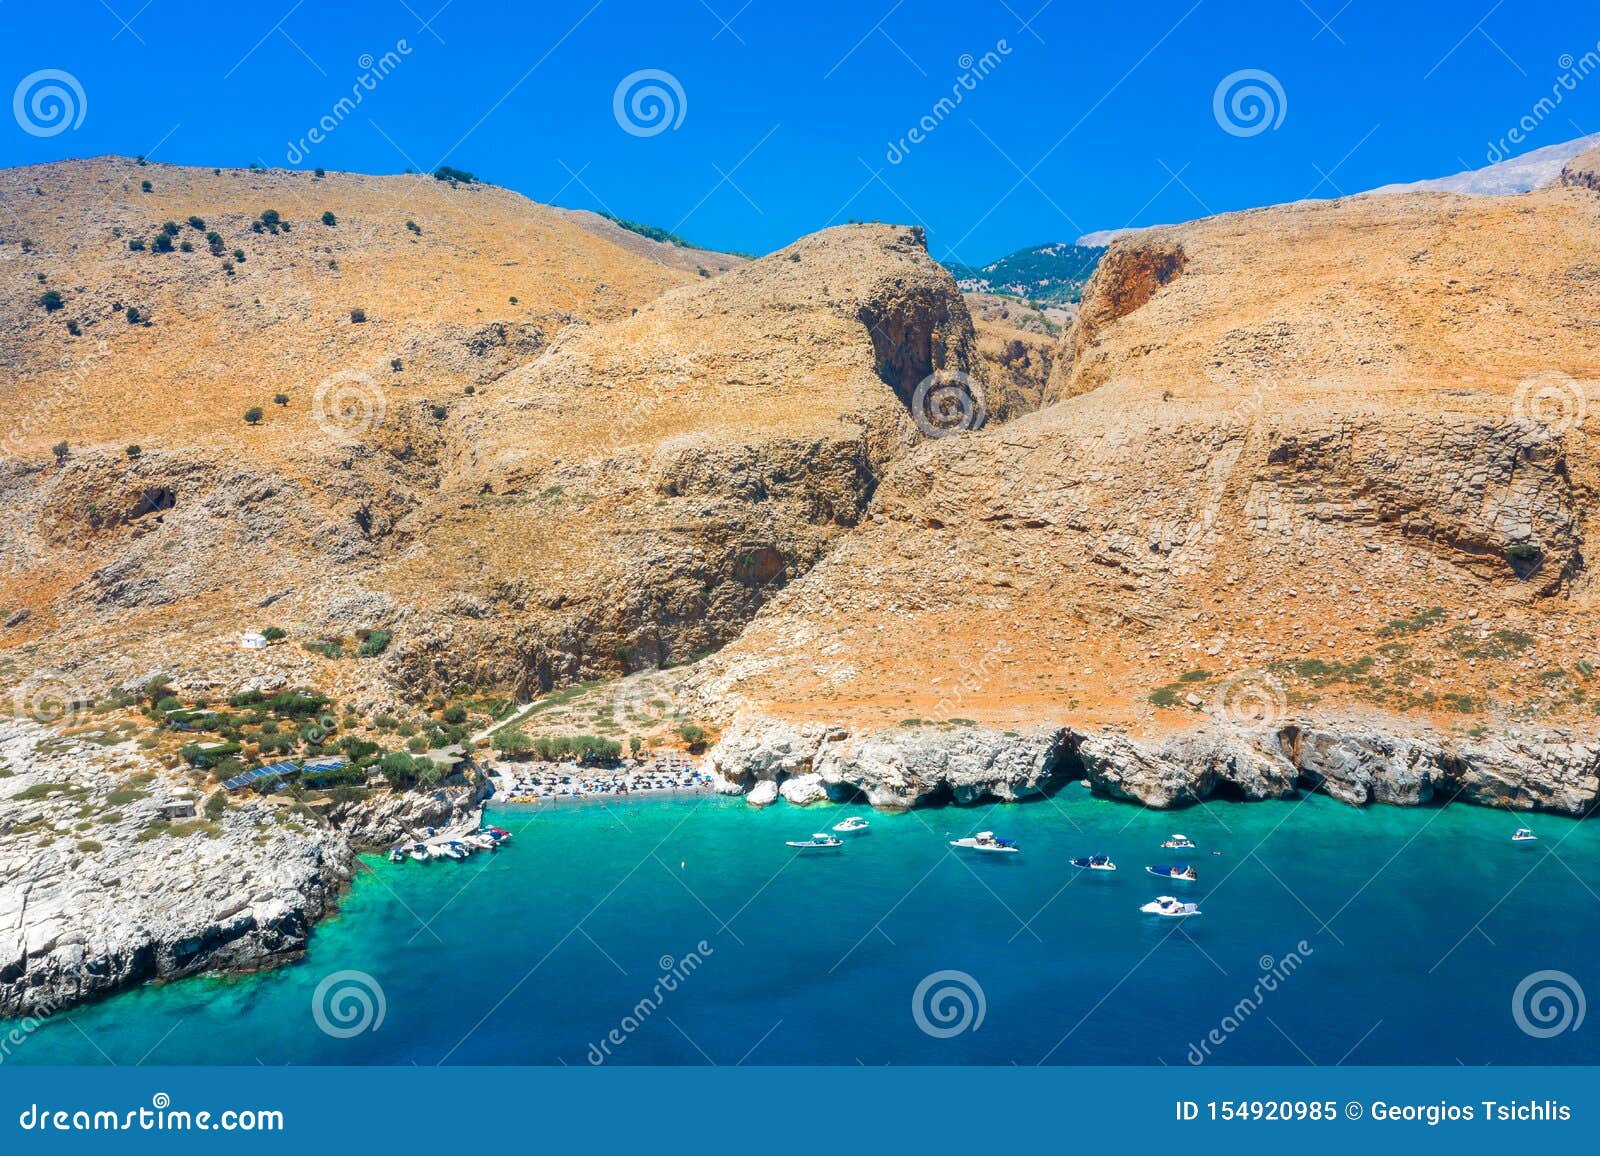 marmara beach at the end of aradena gorge and coastline alongside e4 trail at south-west coast of crete island, greece